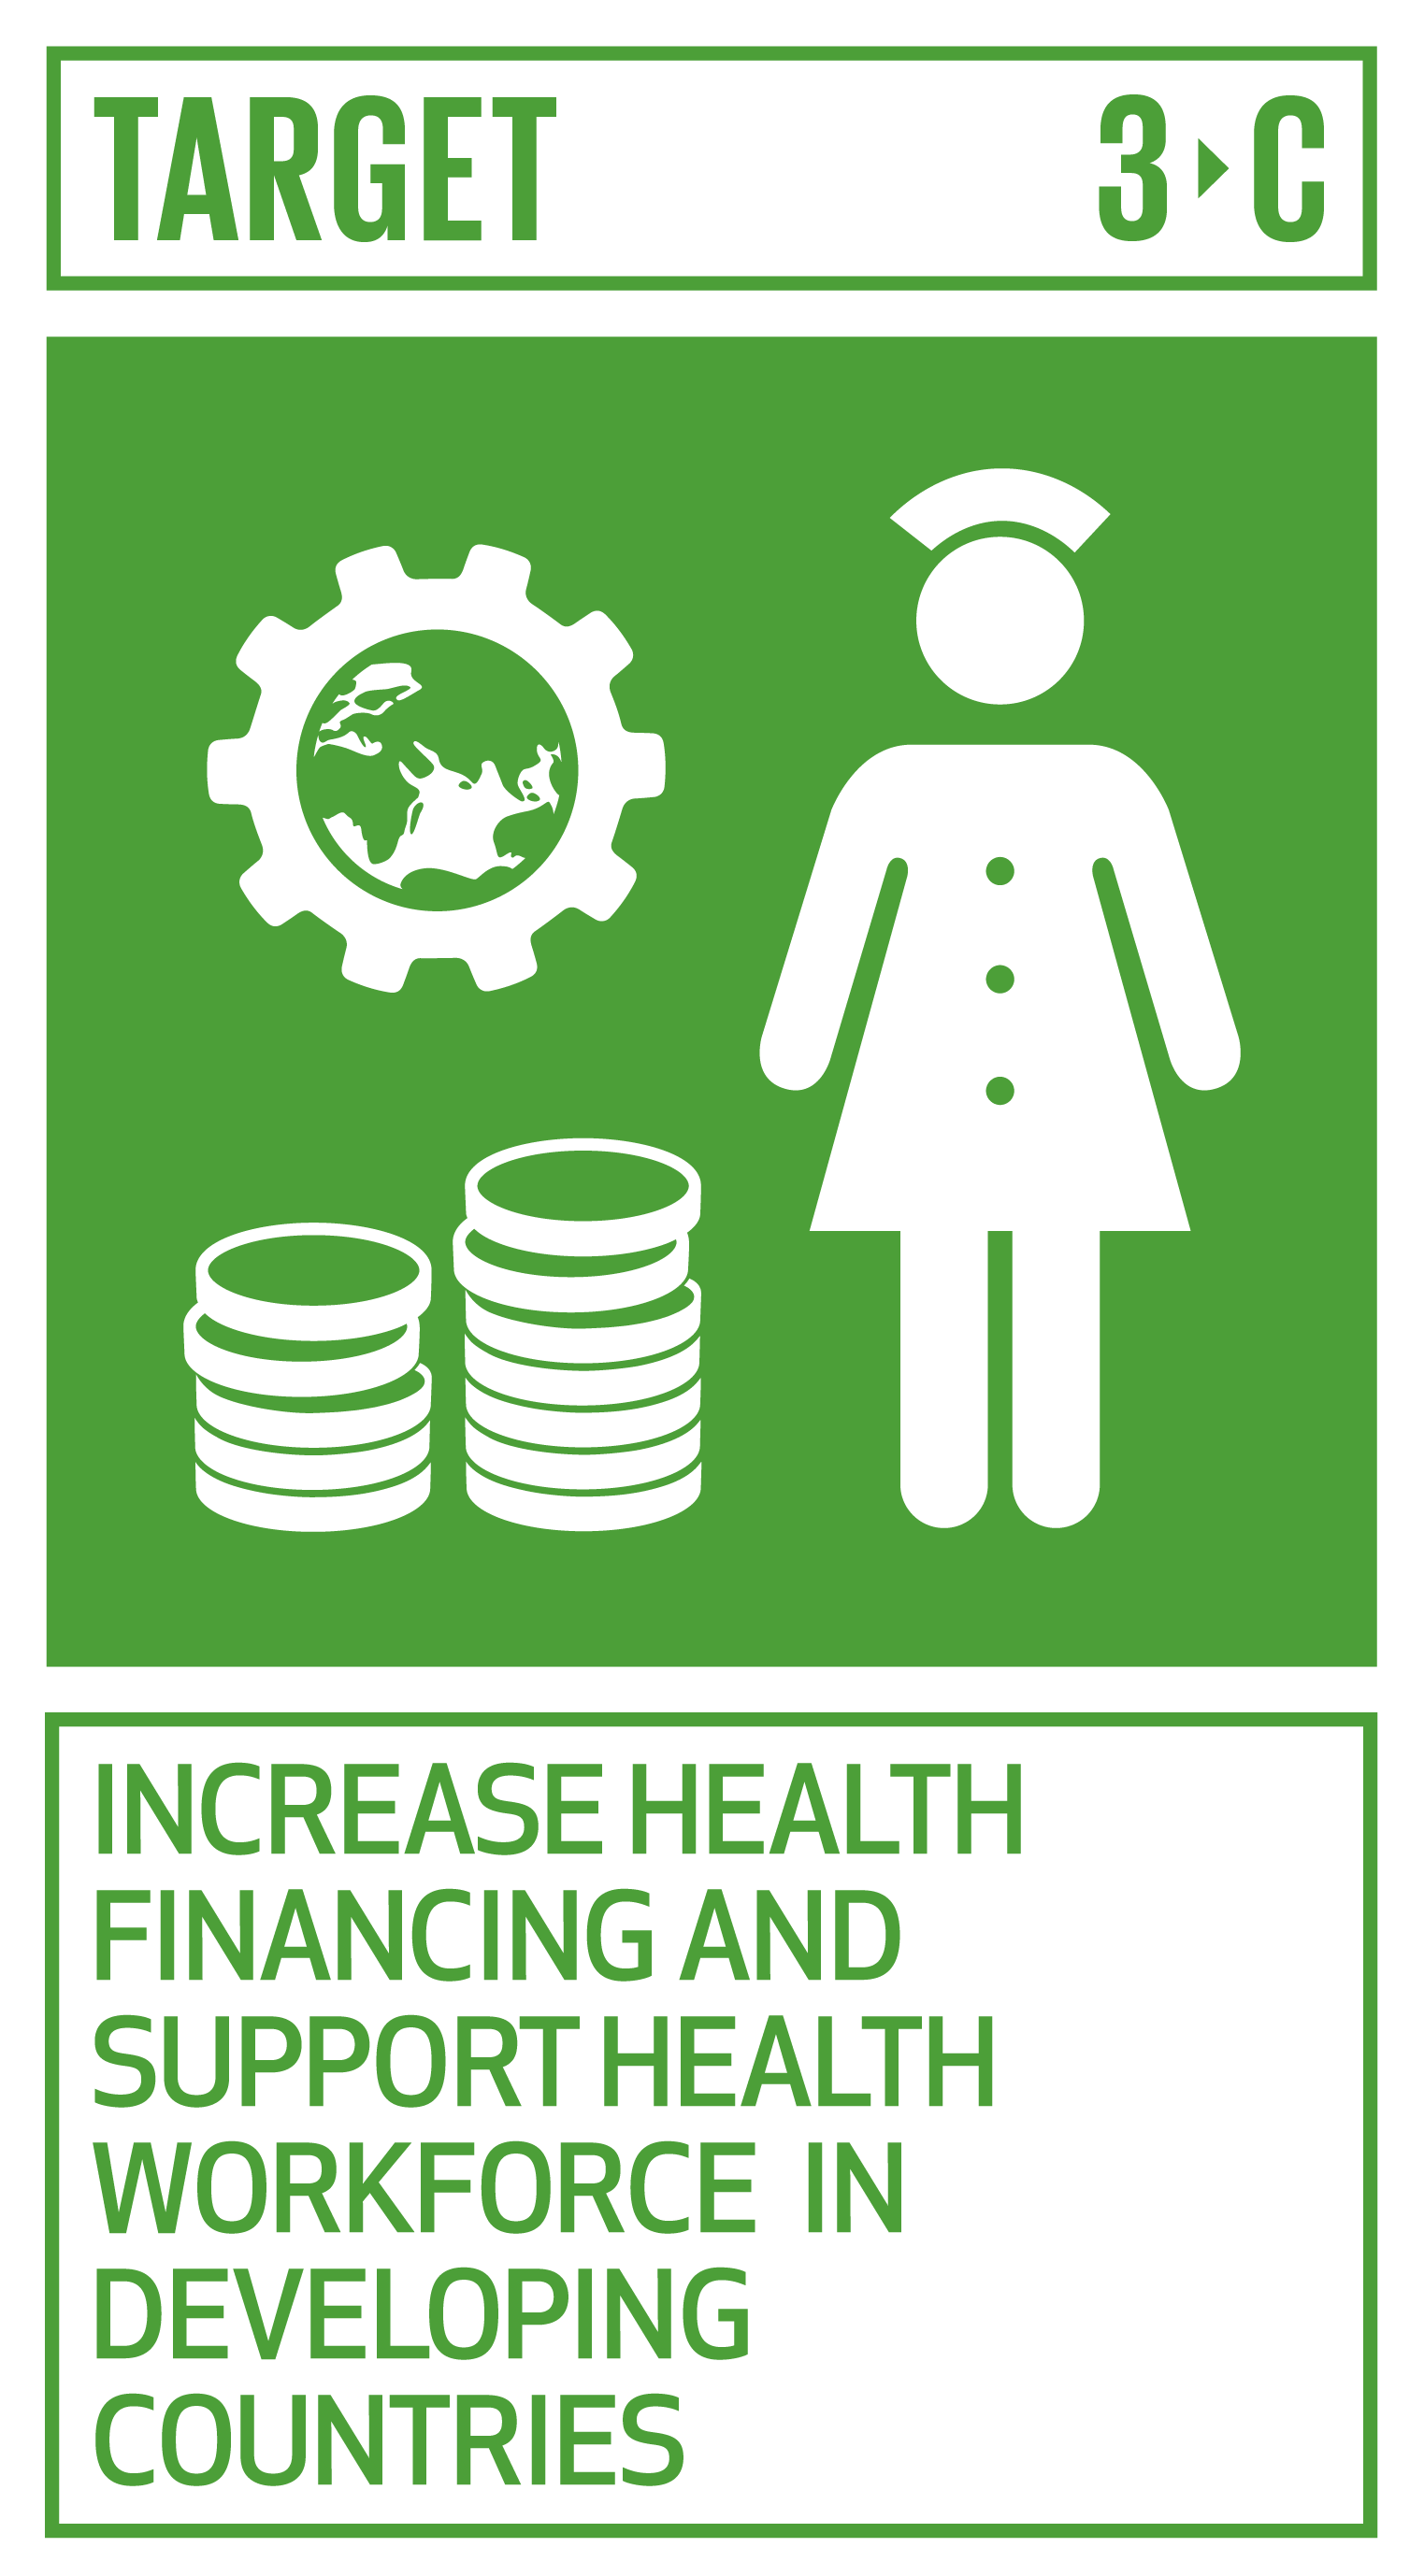 Goal,target,永續發展目標SDGs3目標3.C 增加發展中國家的衛生籌資和支持衛生人力